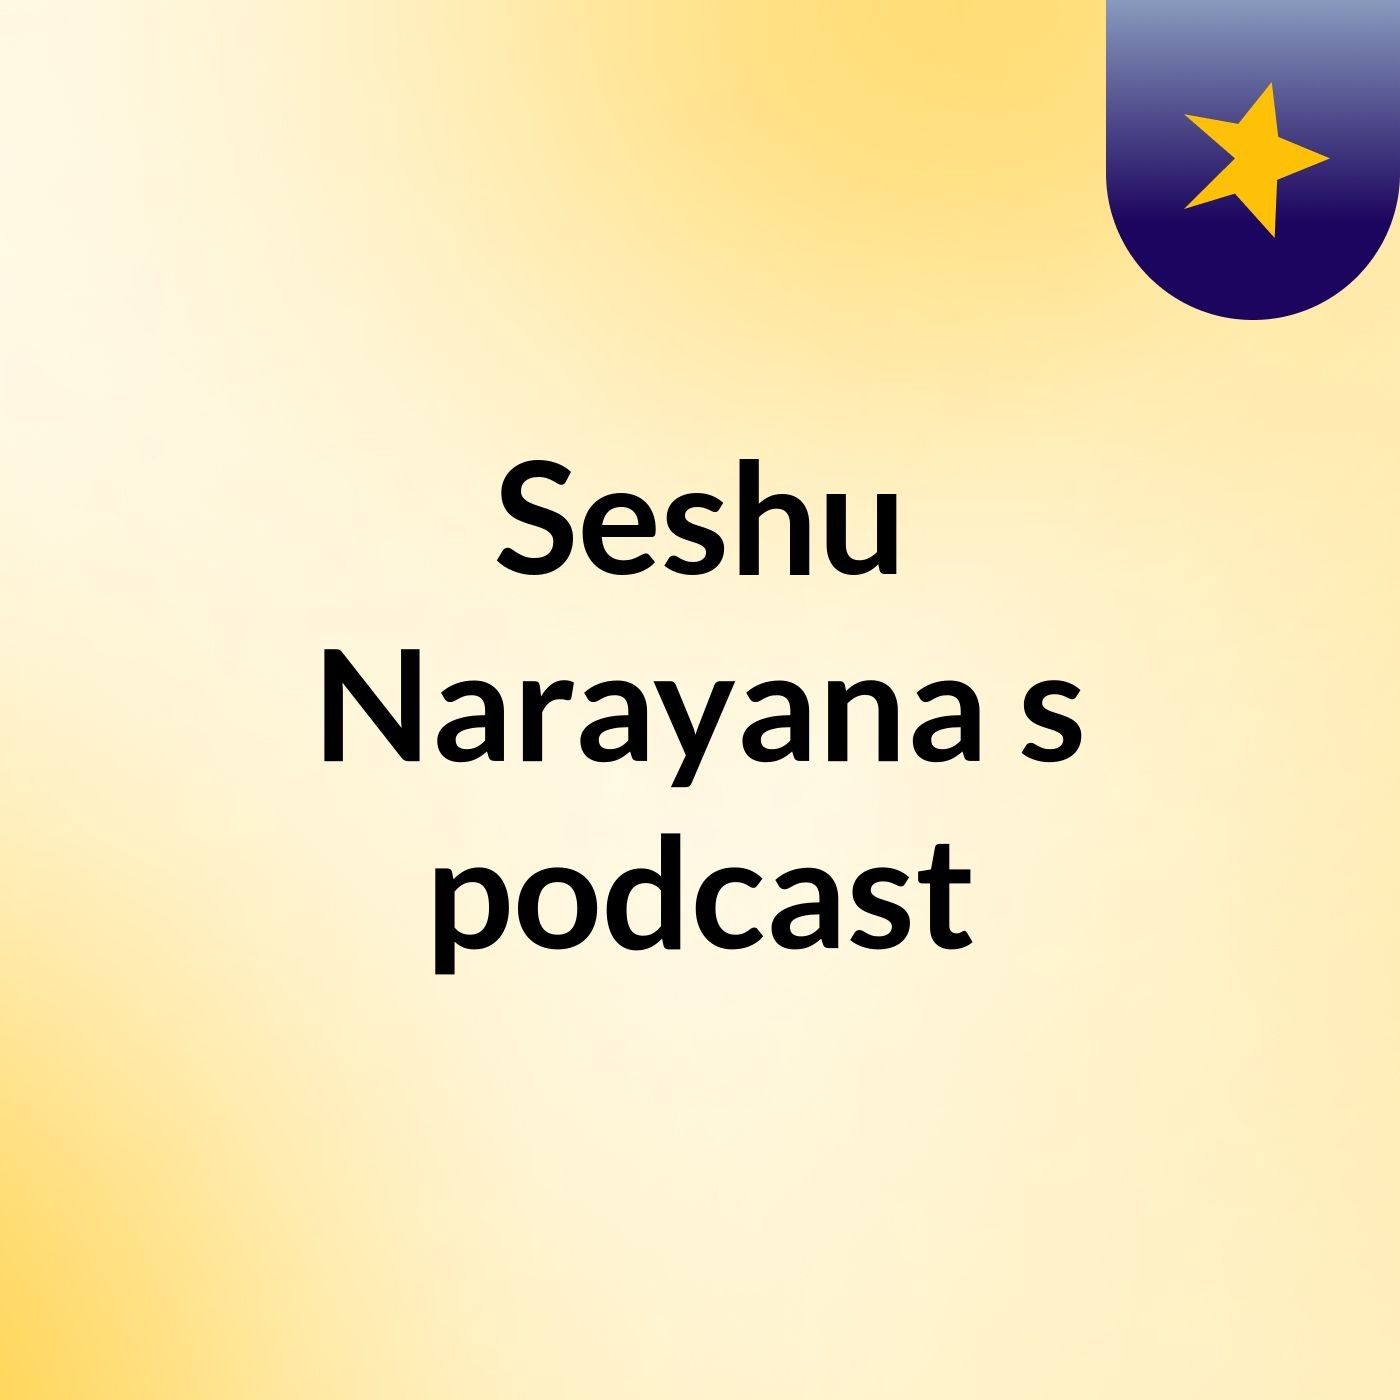 Seshu Narayana's podcast